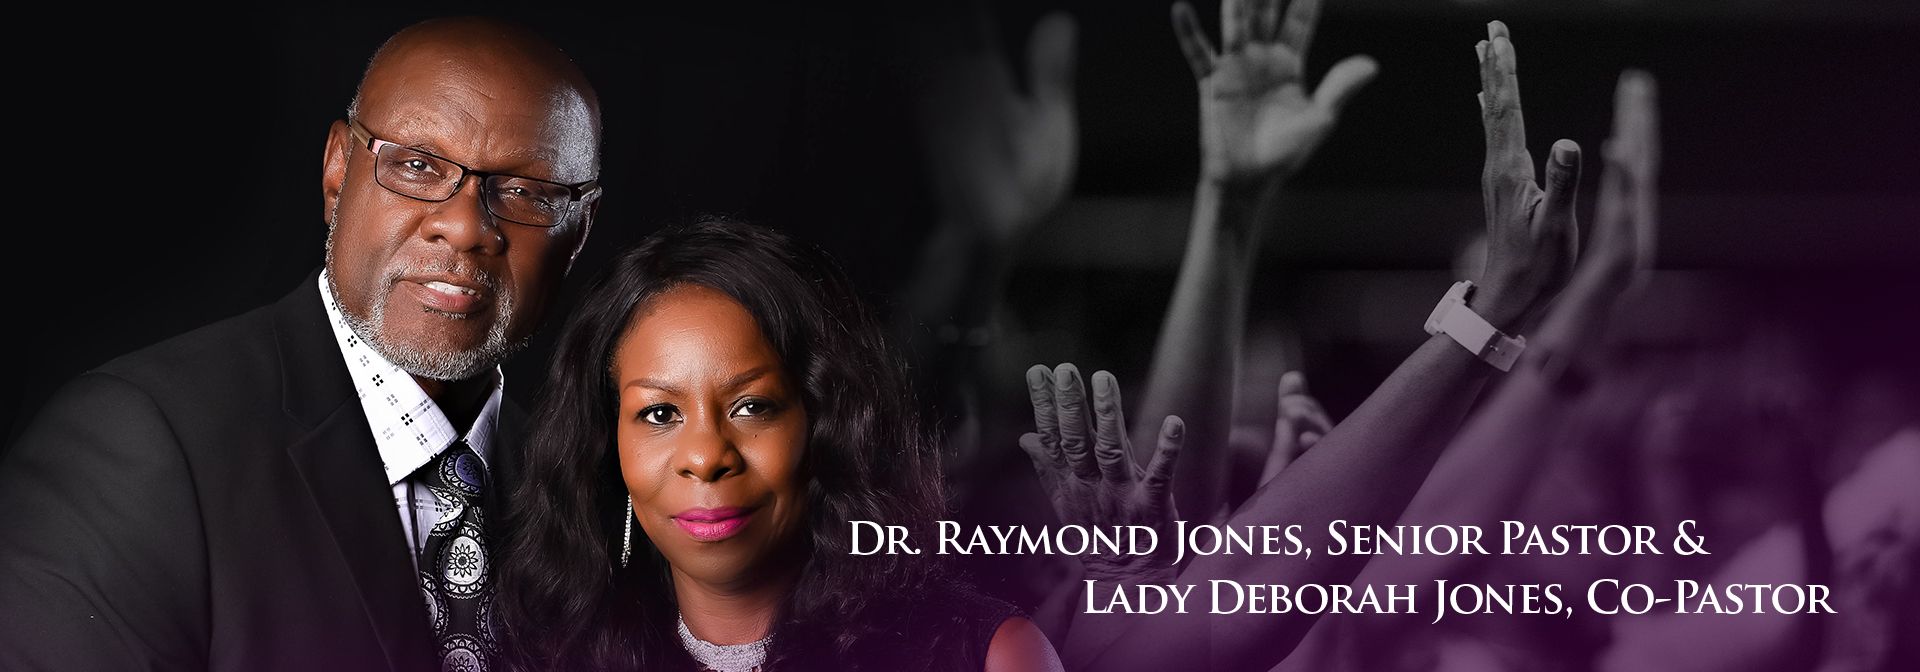 Dr. Raymond Jones, Senior Pastor & Lady Deborah Jones, Co-Pastor